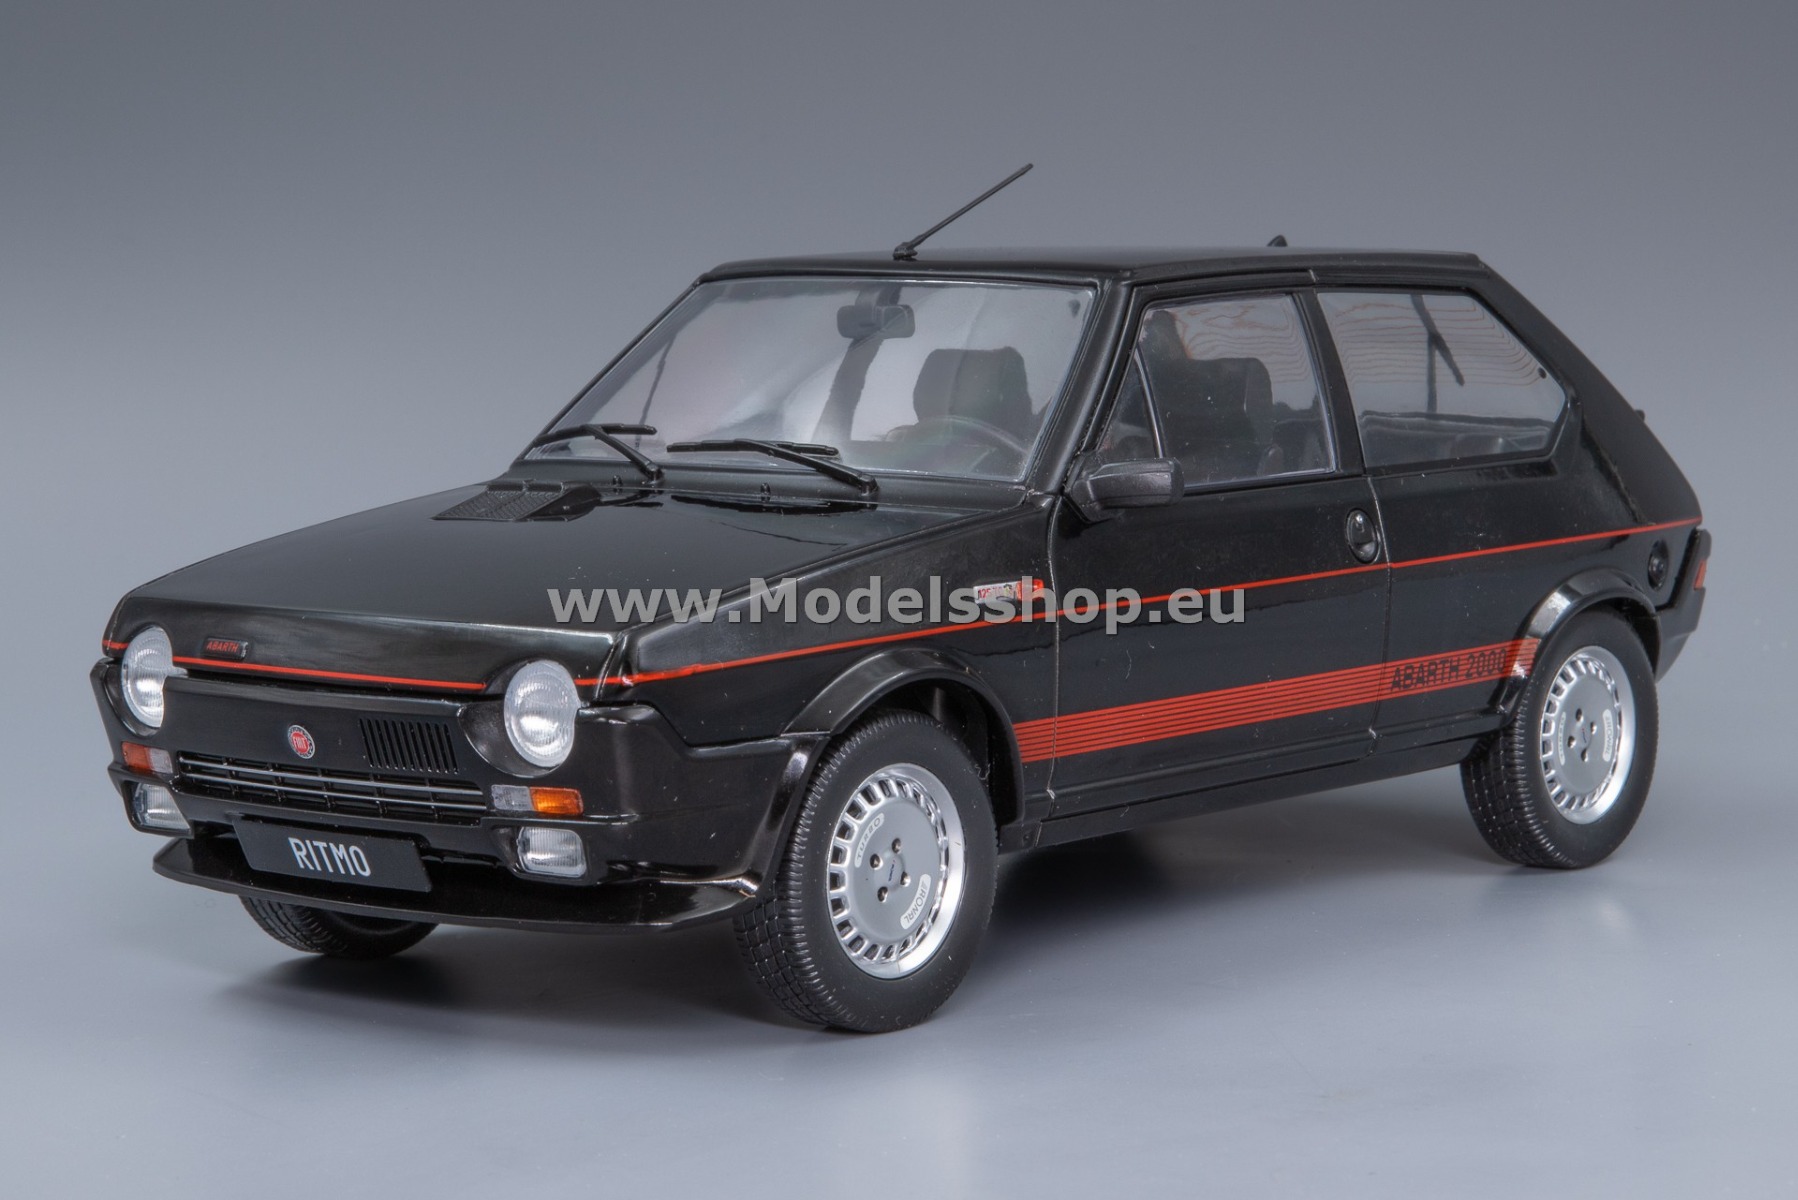 MCG 18418 Fiat Ritmo TC 125 Abarth, 1980 /black/